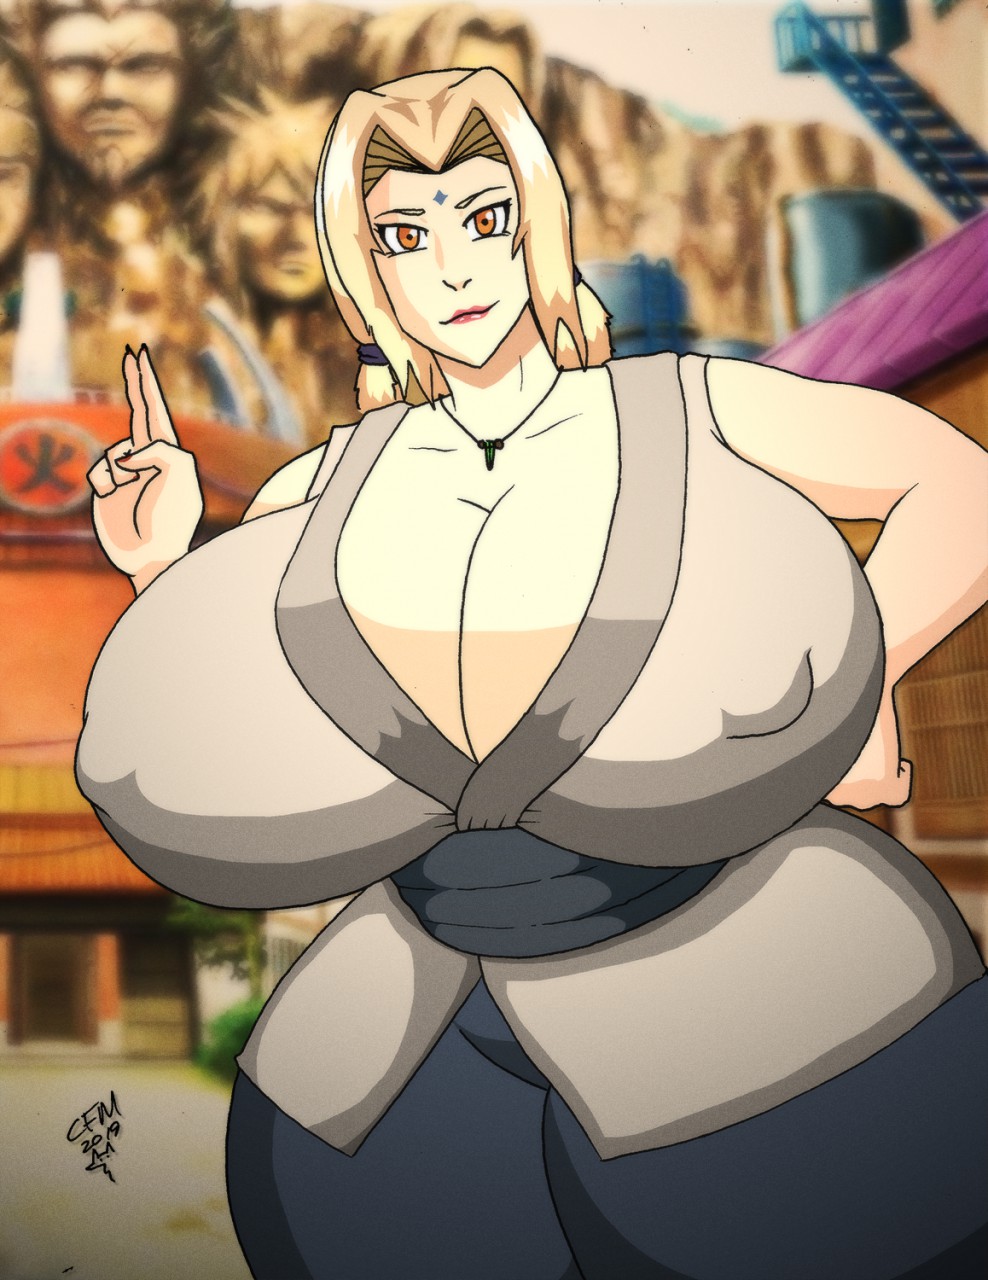 Lady tsunade's boobs